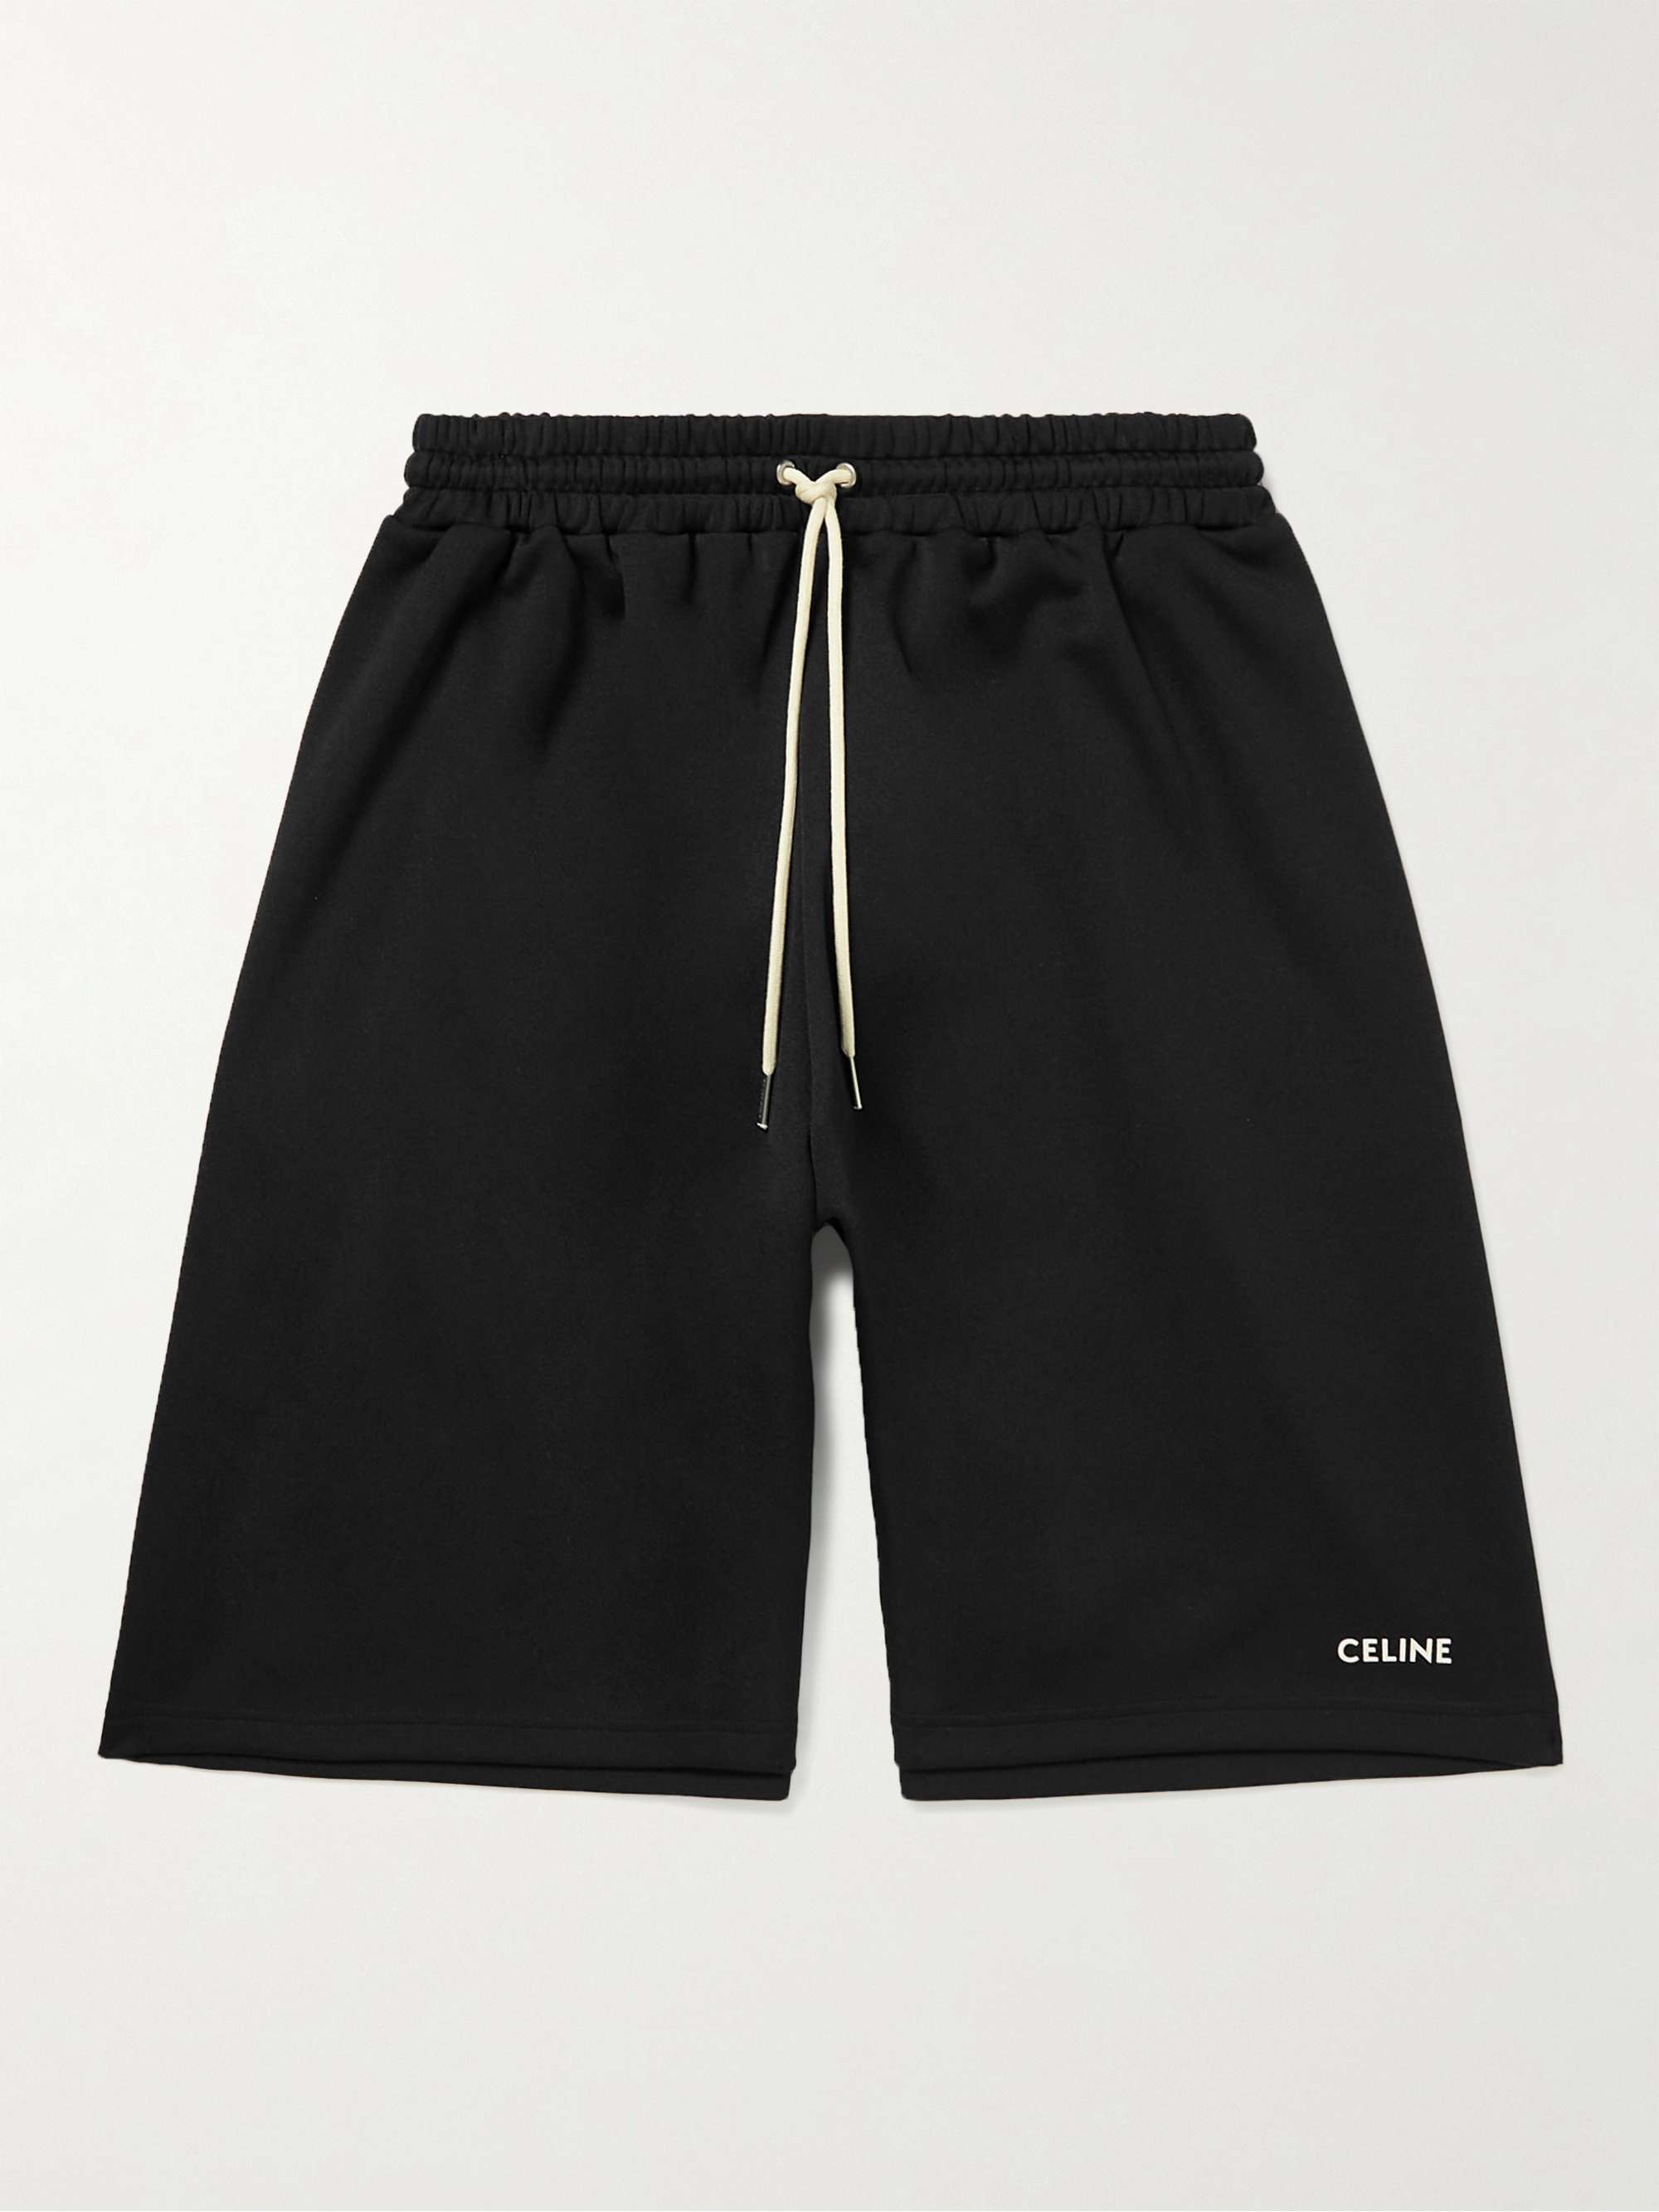 Celine Homme Wide-Leg logo-print Tech-Jersey Shorts - Men - Black Shorts - XL